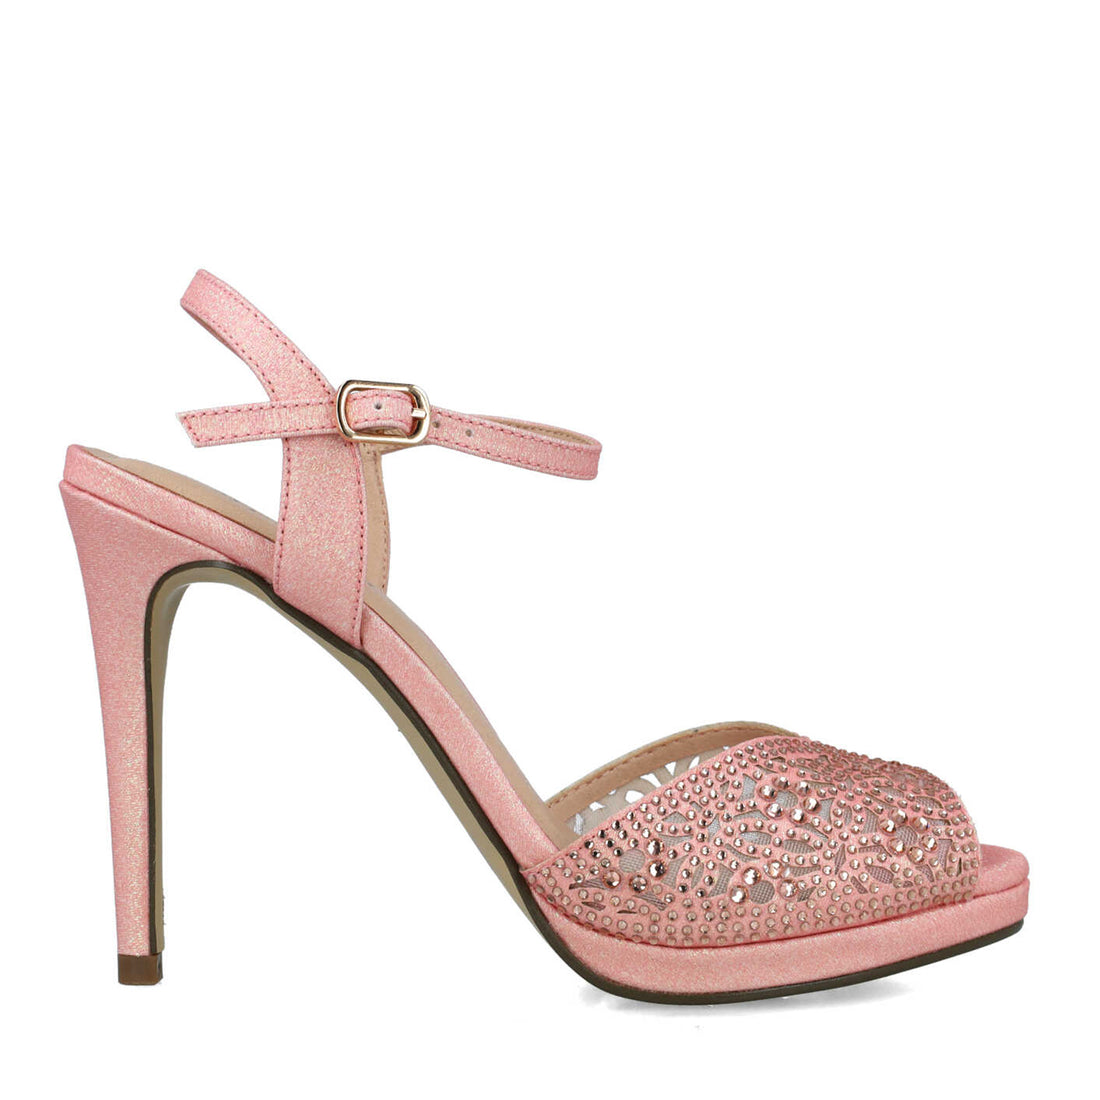 Blush Pink Embellished Peep Toe High Heel Sandals